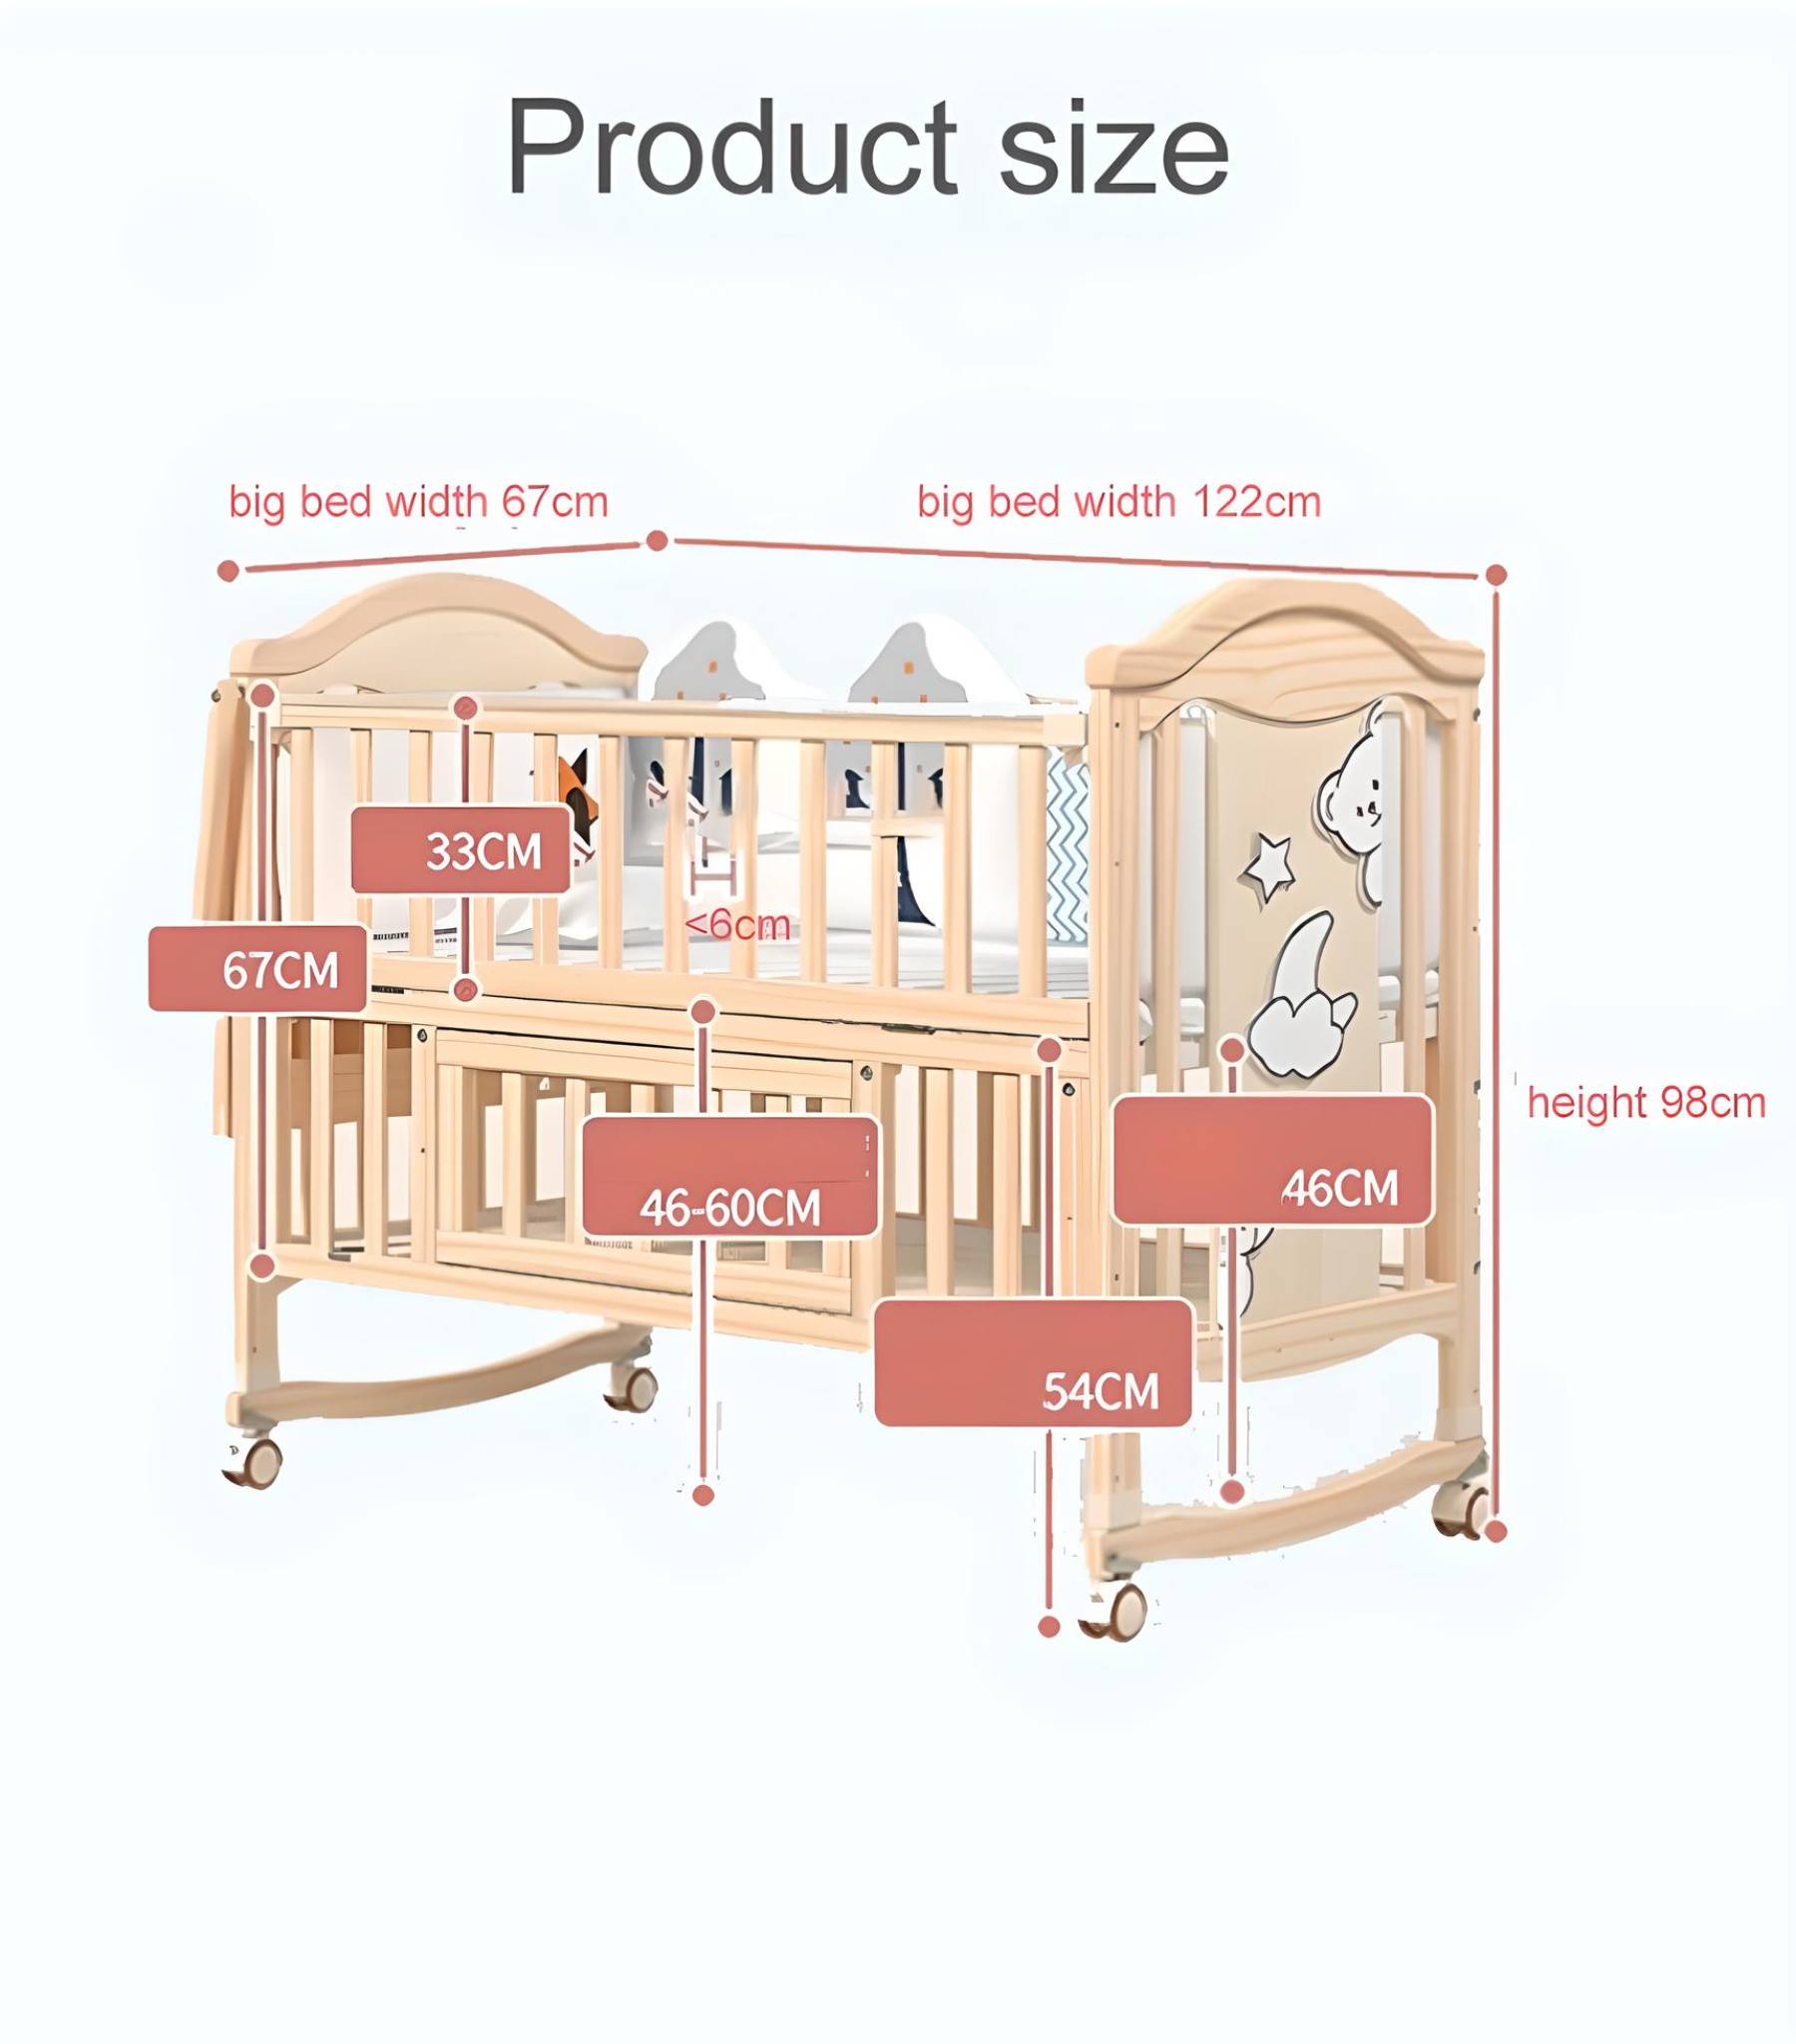 Minikin Multifunctional Extendable Wooden Crib I Mattress & Bumper Beds  I NB - 6 Years